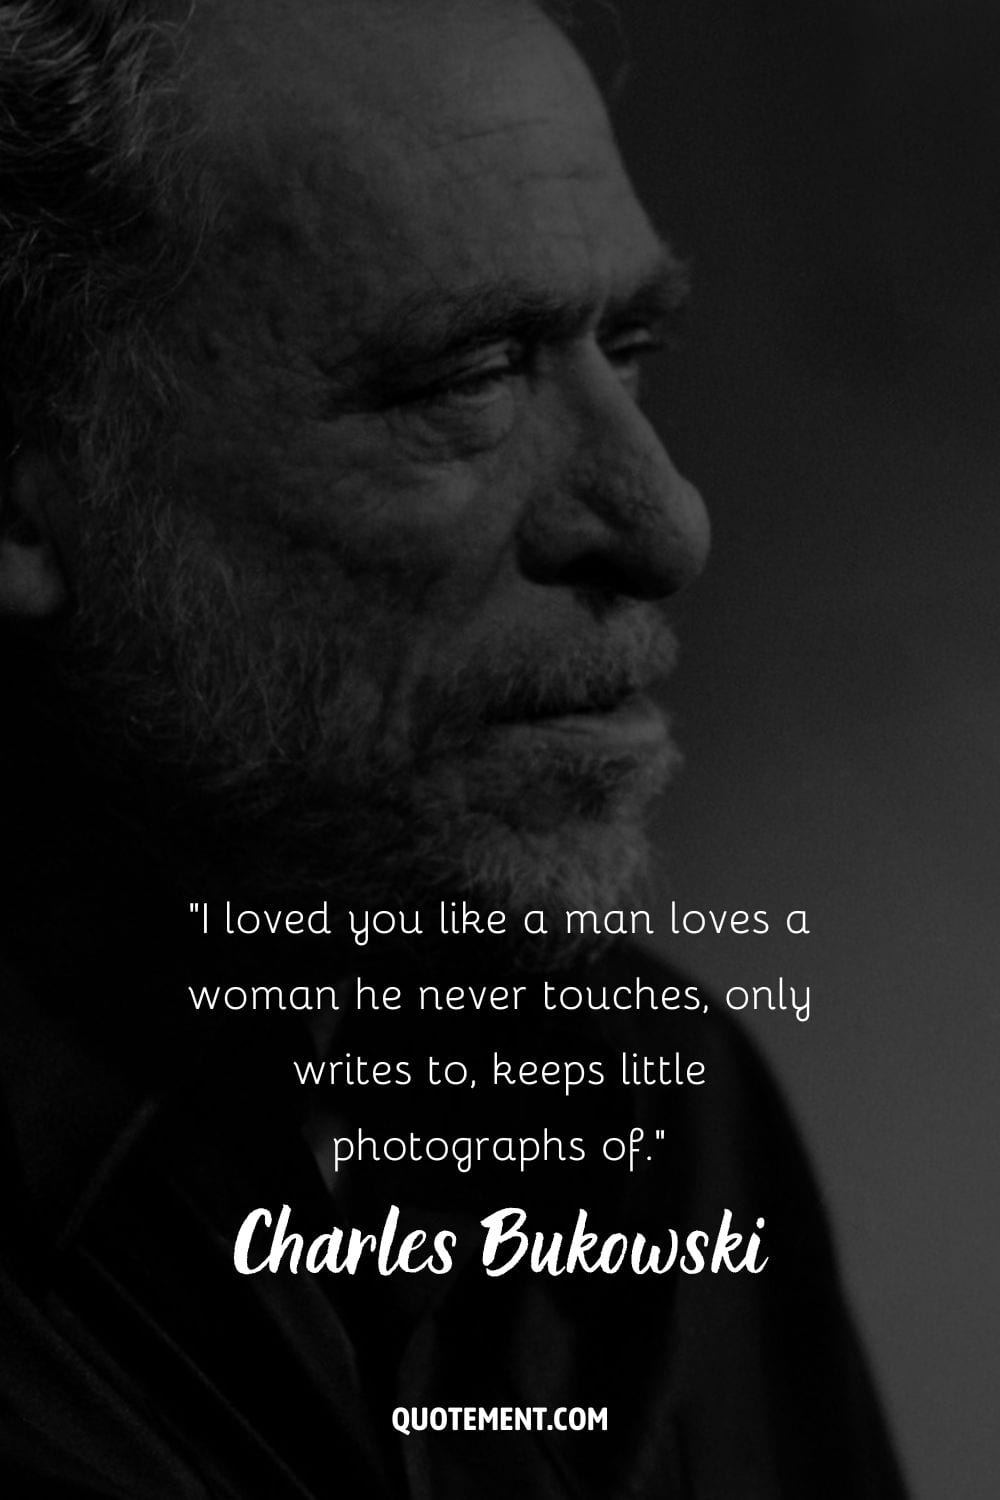 Charles Bukowski in profile, wearing a serious look